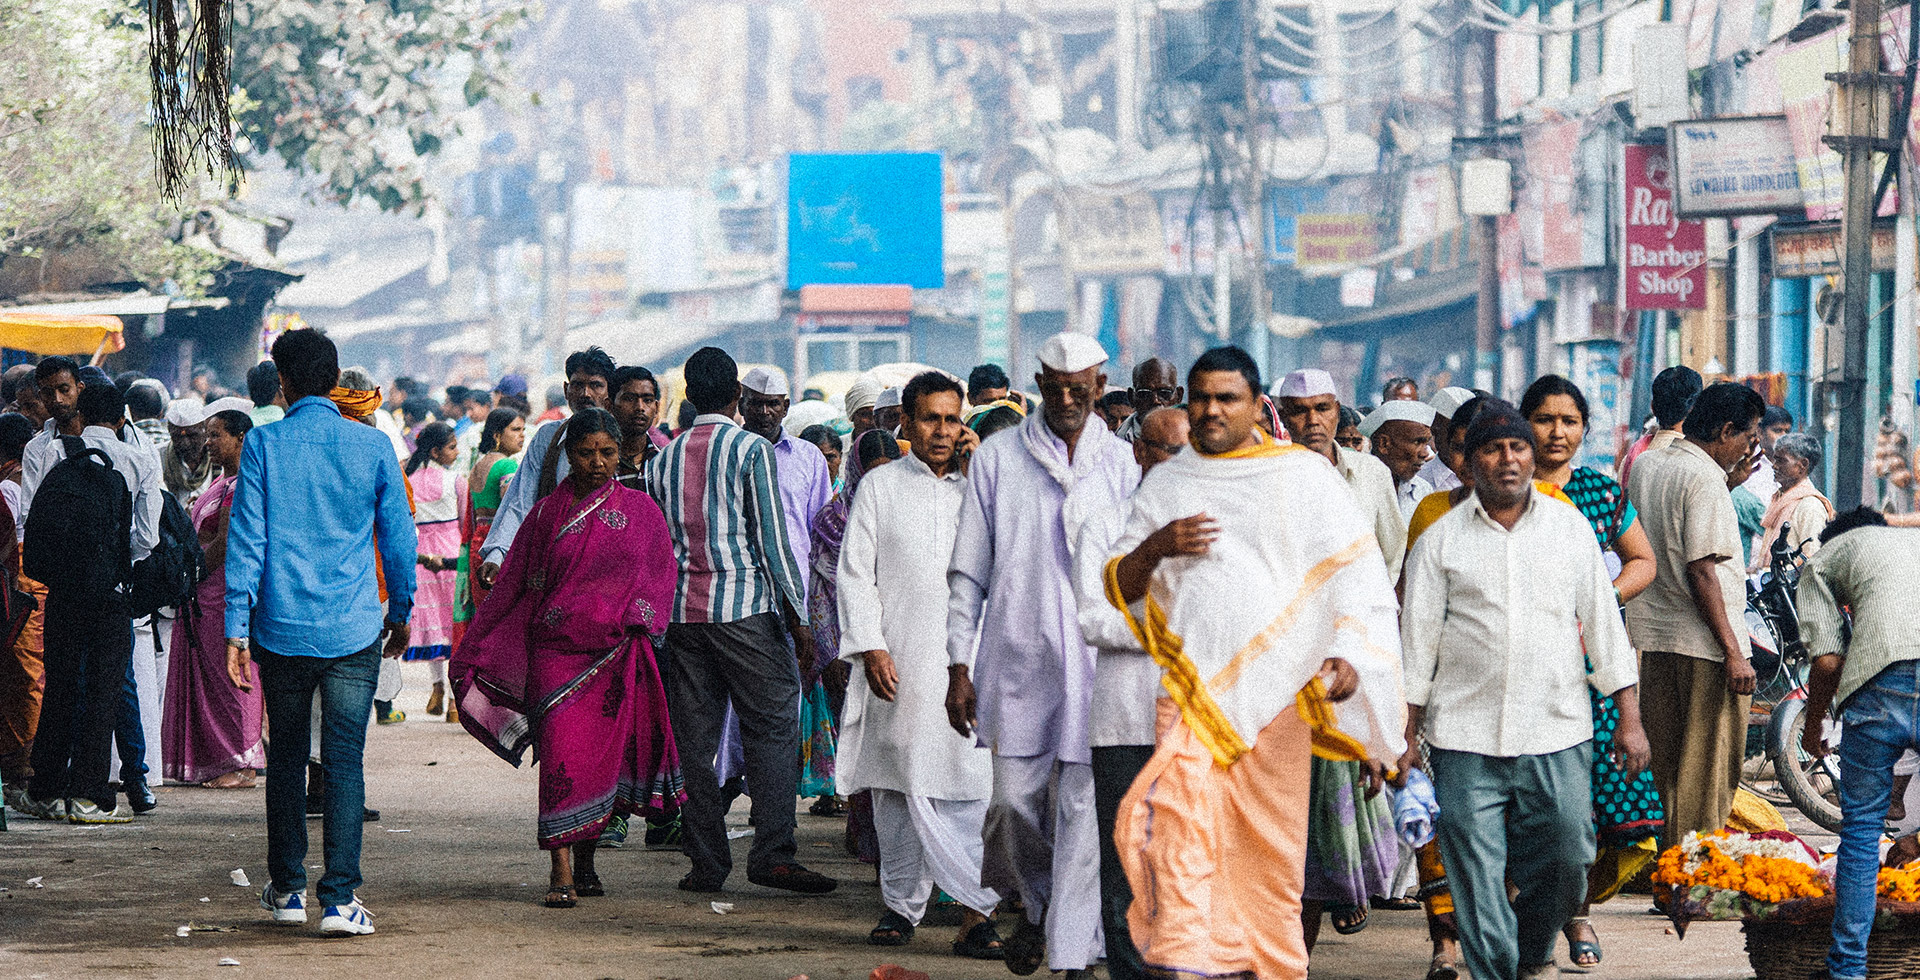 A crowd walks on a street in Varanasi, India